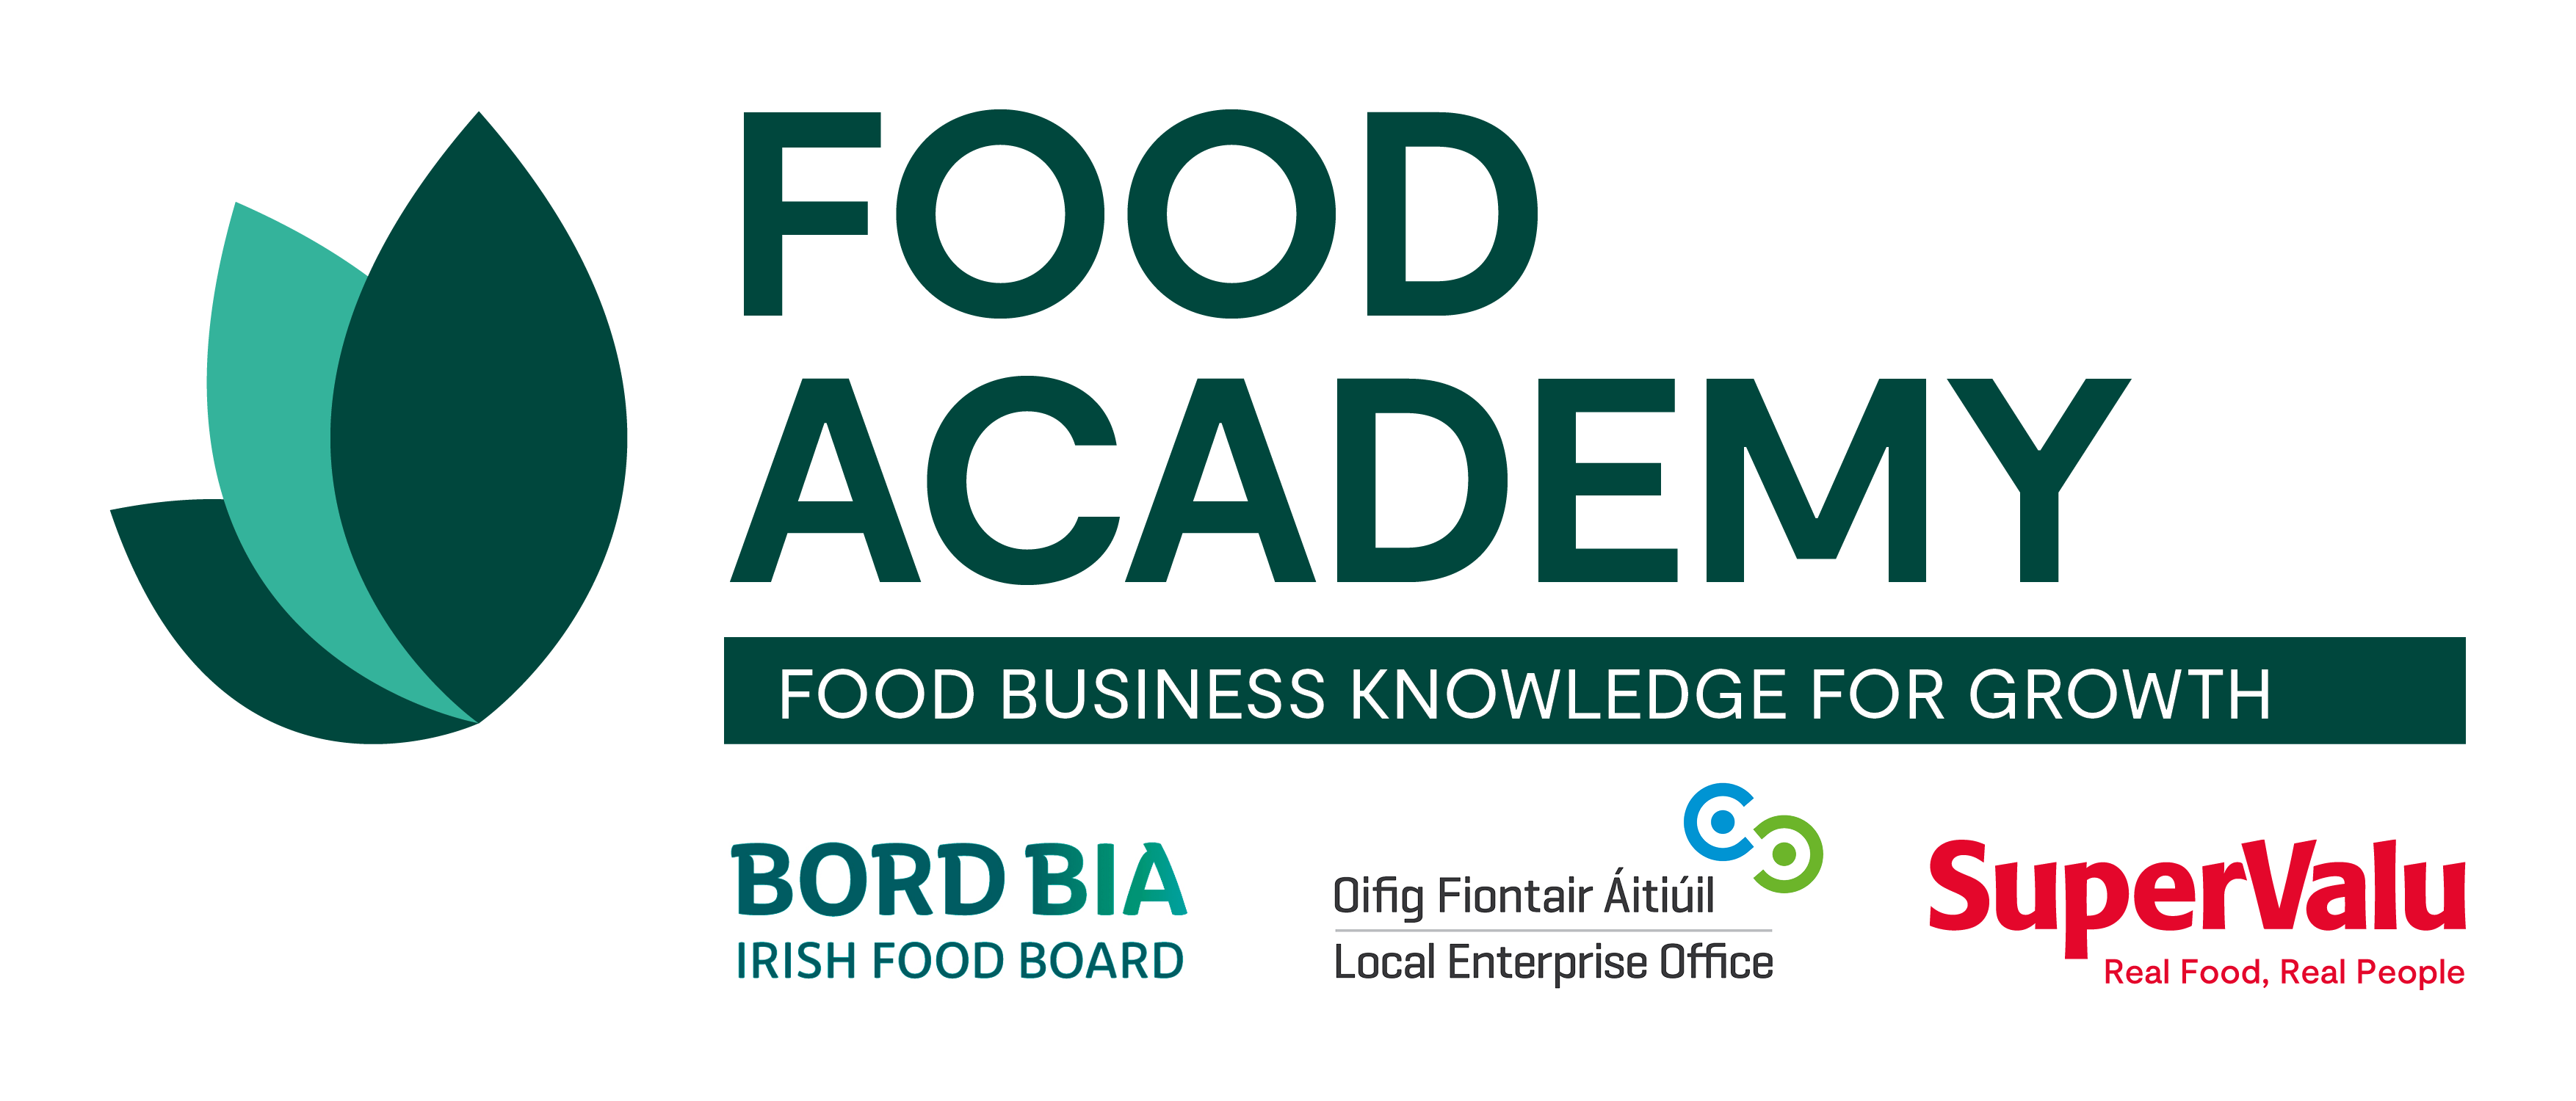 Food Academy Programme